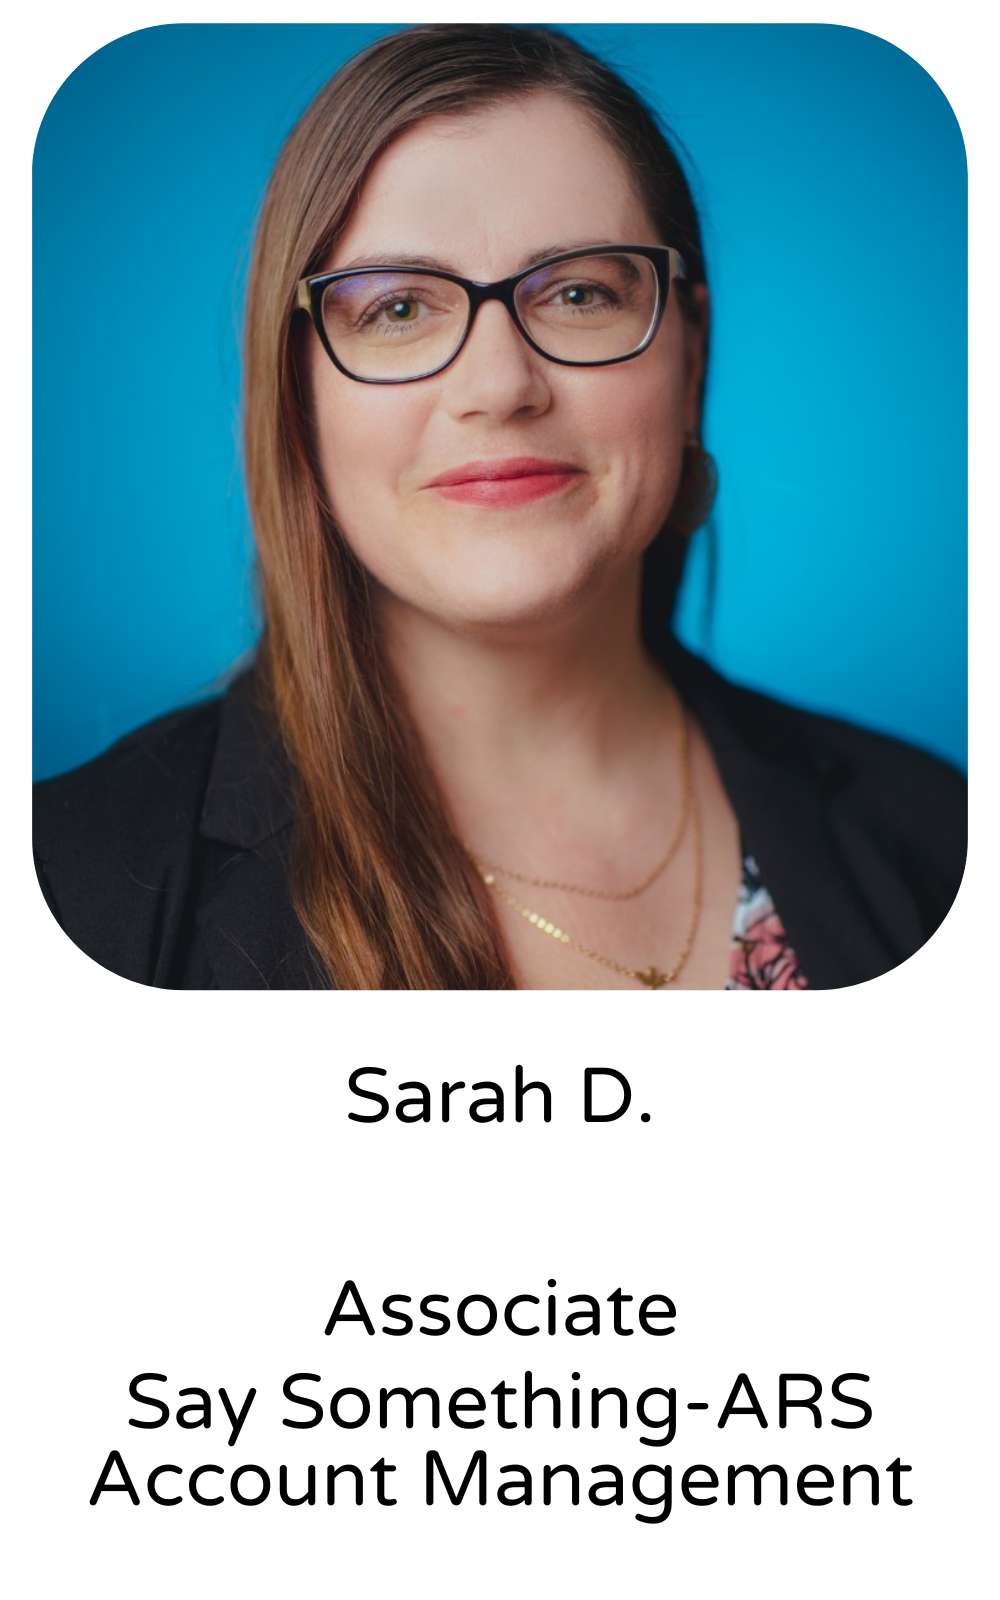 Sarah D., Associate, Say Something-ARS Account Management